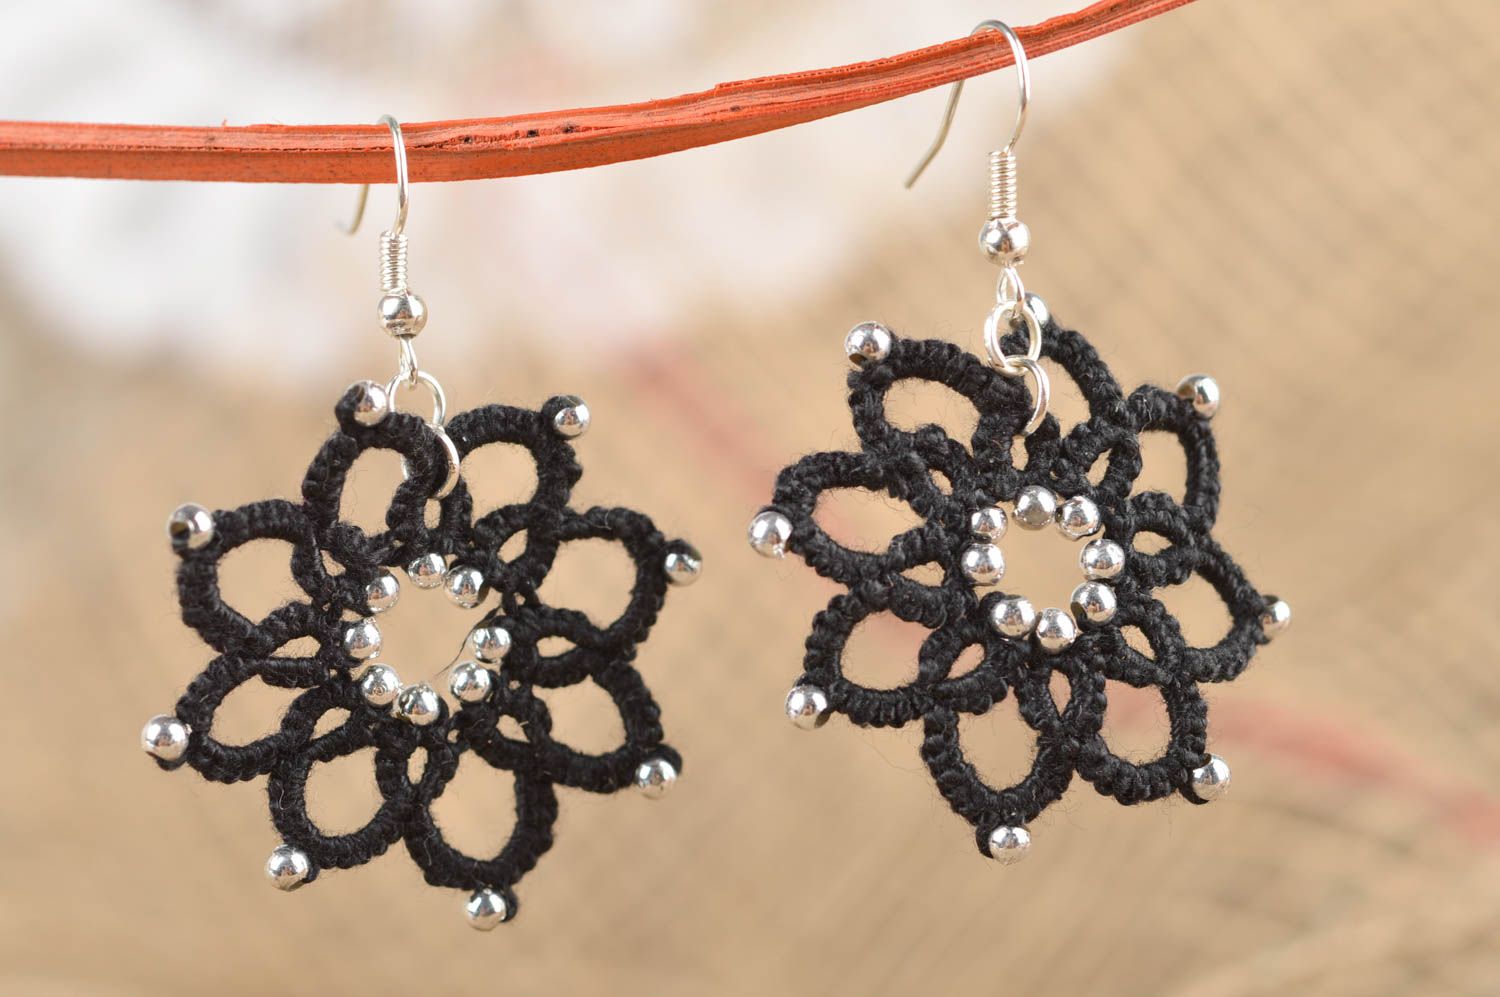 Stylish handmade woven flower earrings tatting ideas textile earrings with beads photo 1